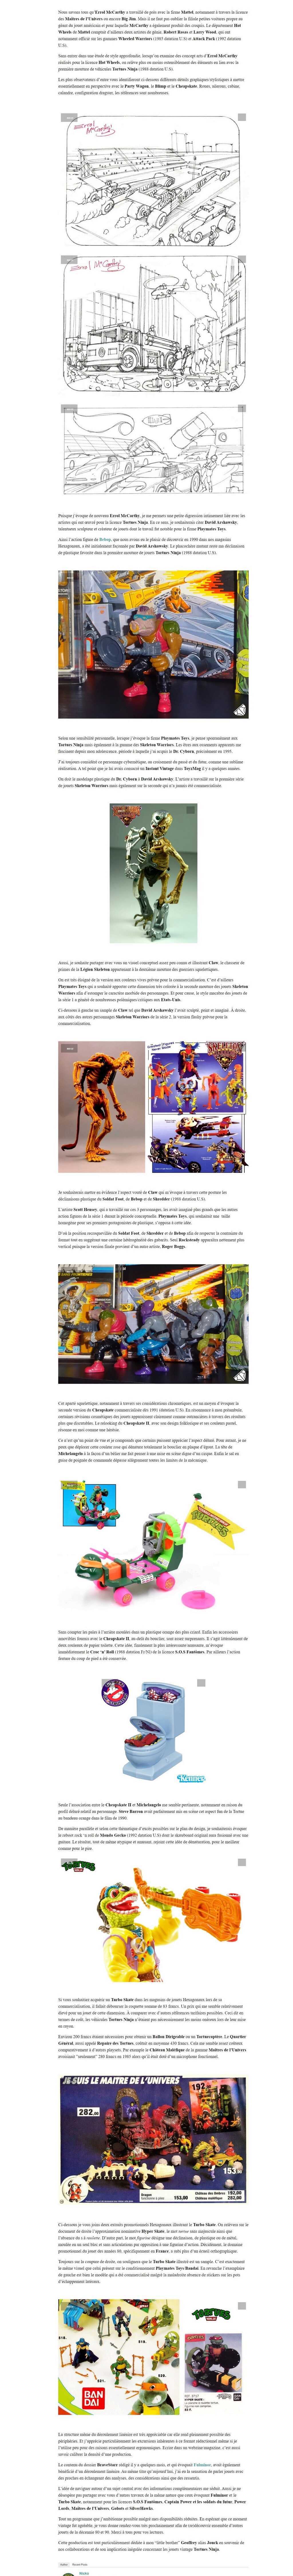 Les Tortues Ninja - Gamme Playmates Bandaï 1988 - 1998 - Page 3 Articl22